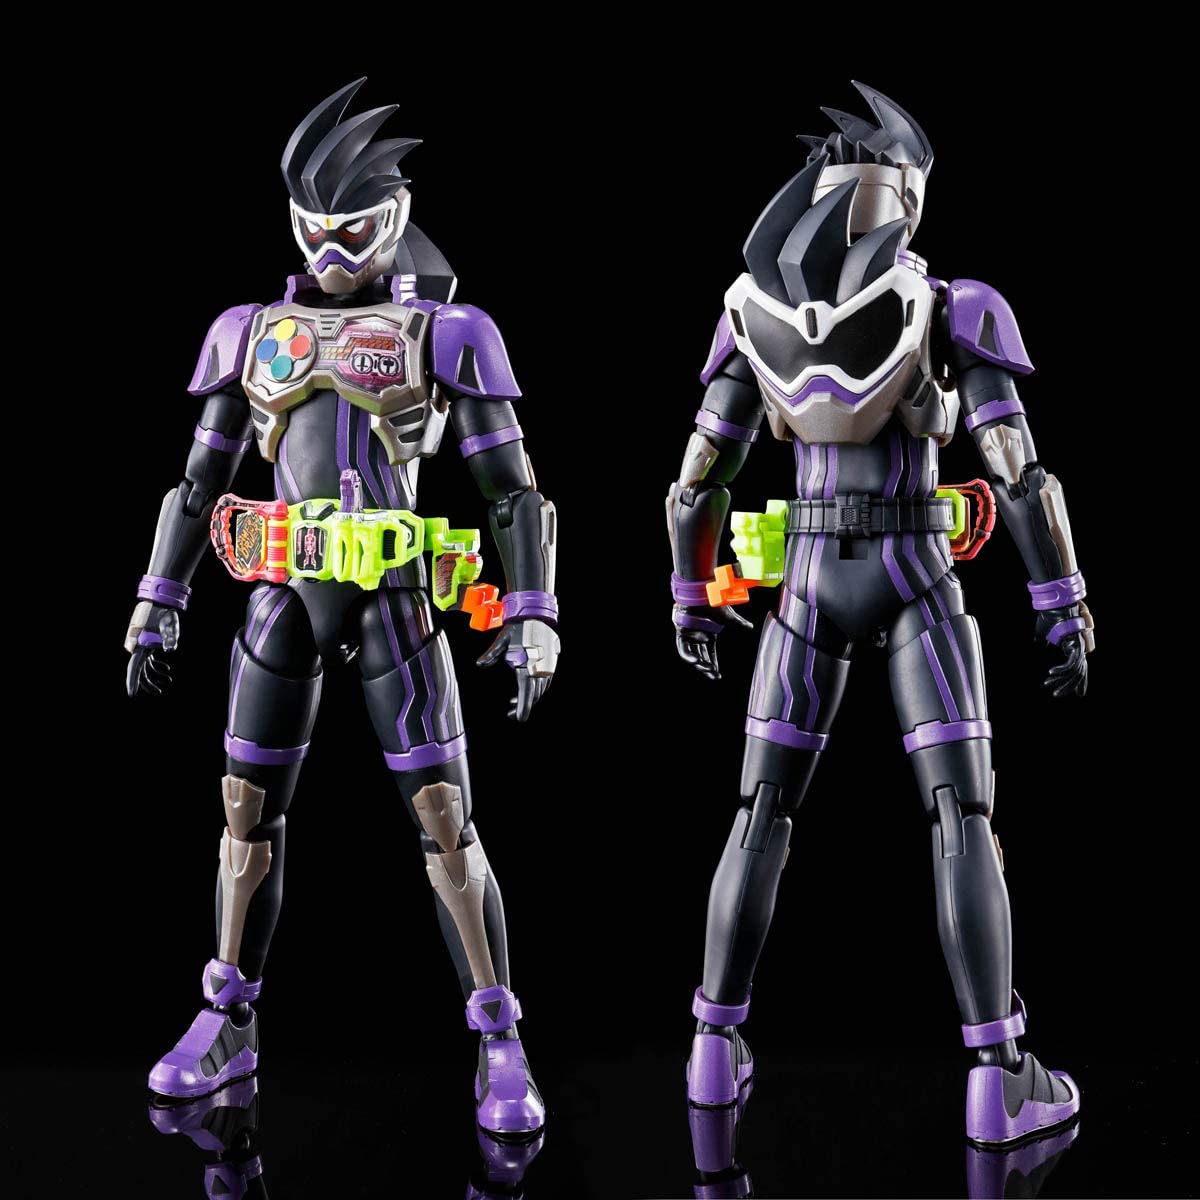 Figure-rise Standard - Kamen Rider Genm